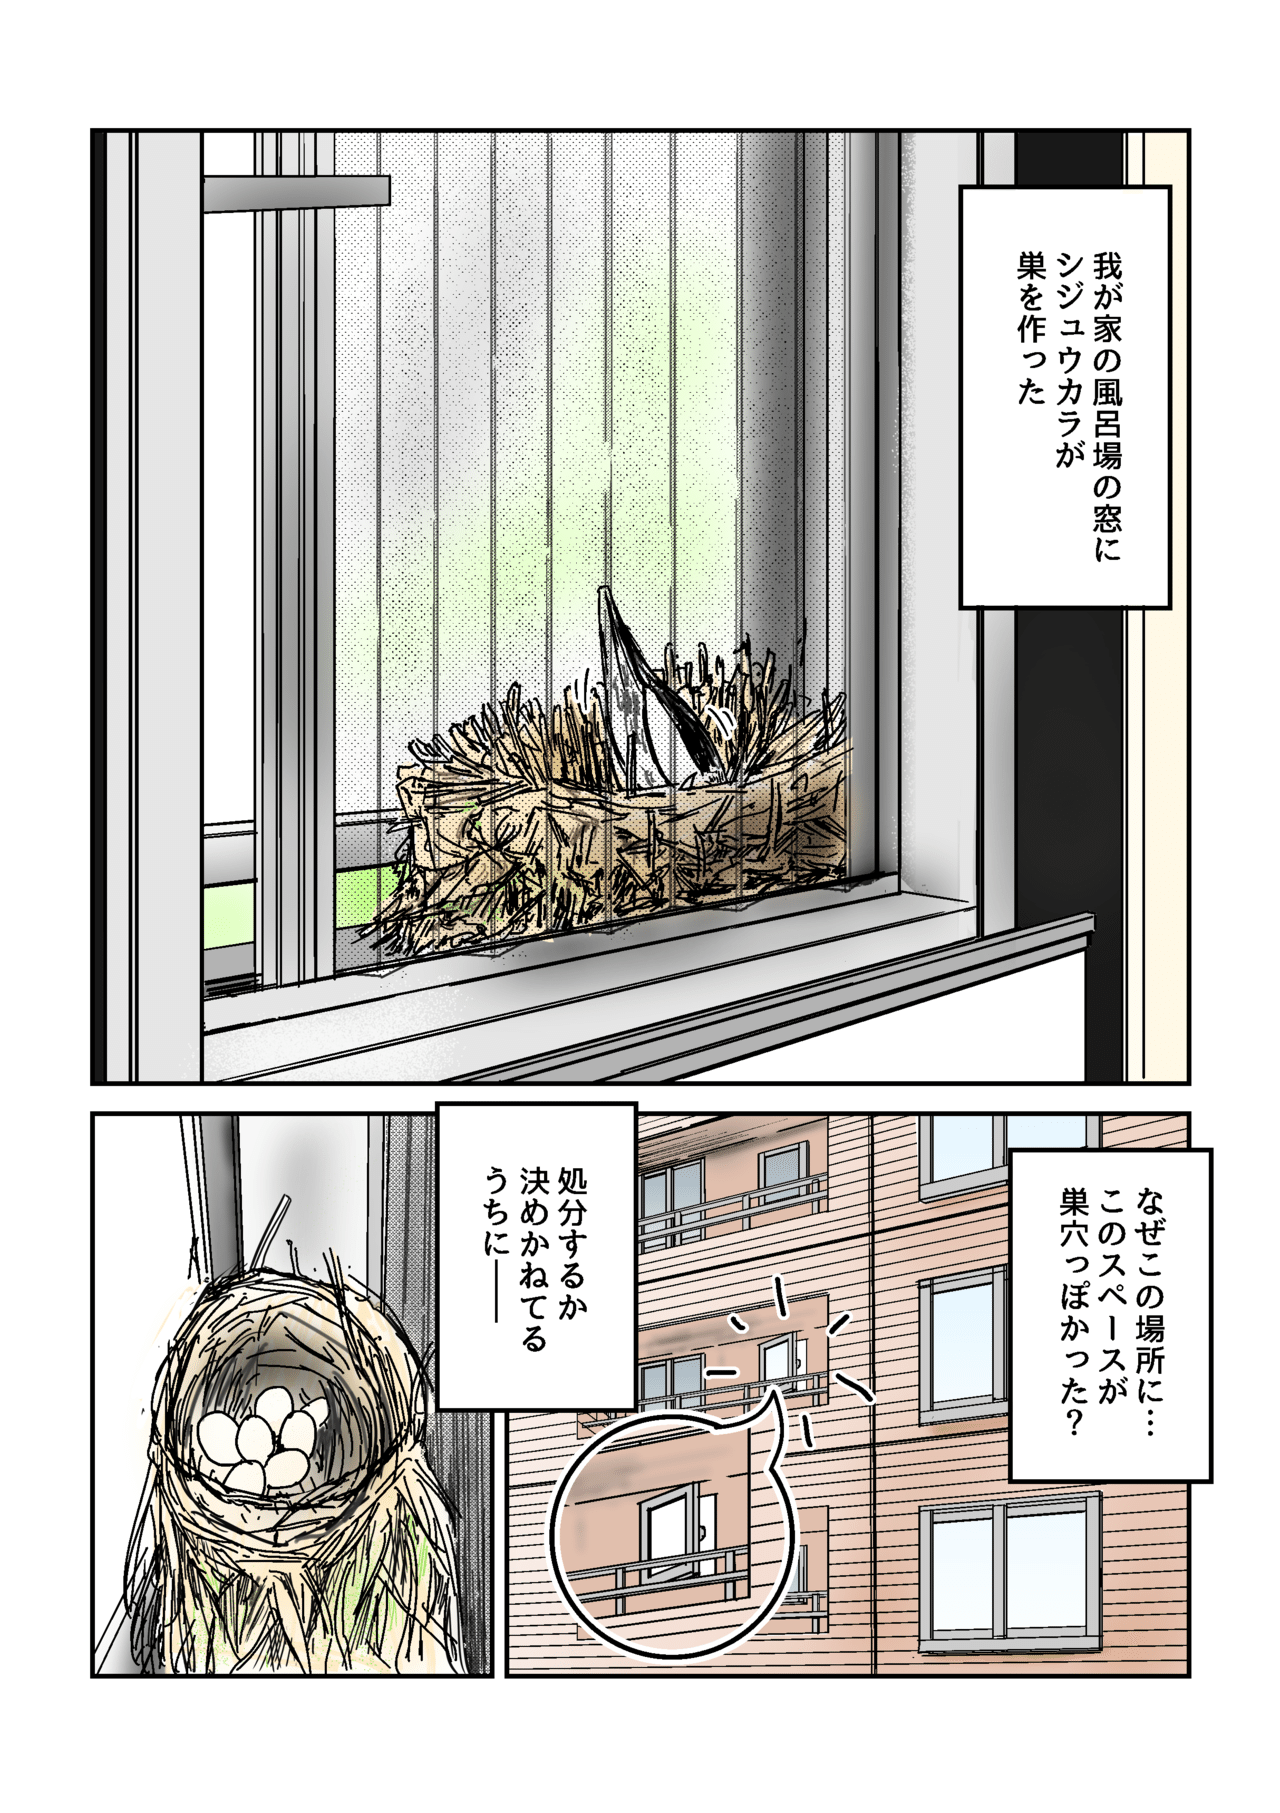 20190324-シジュウカラ_002